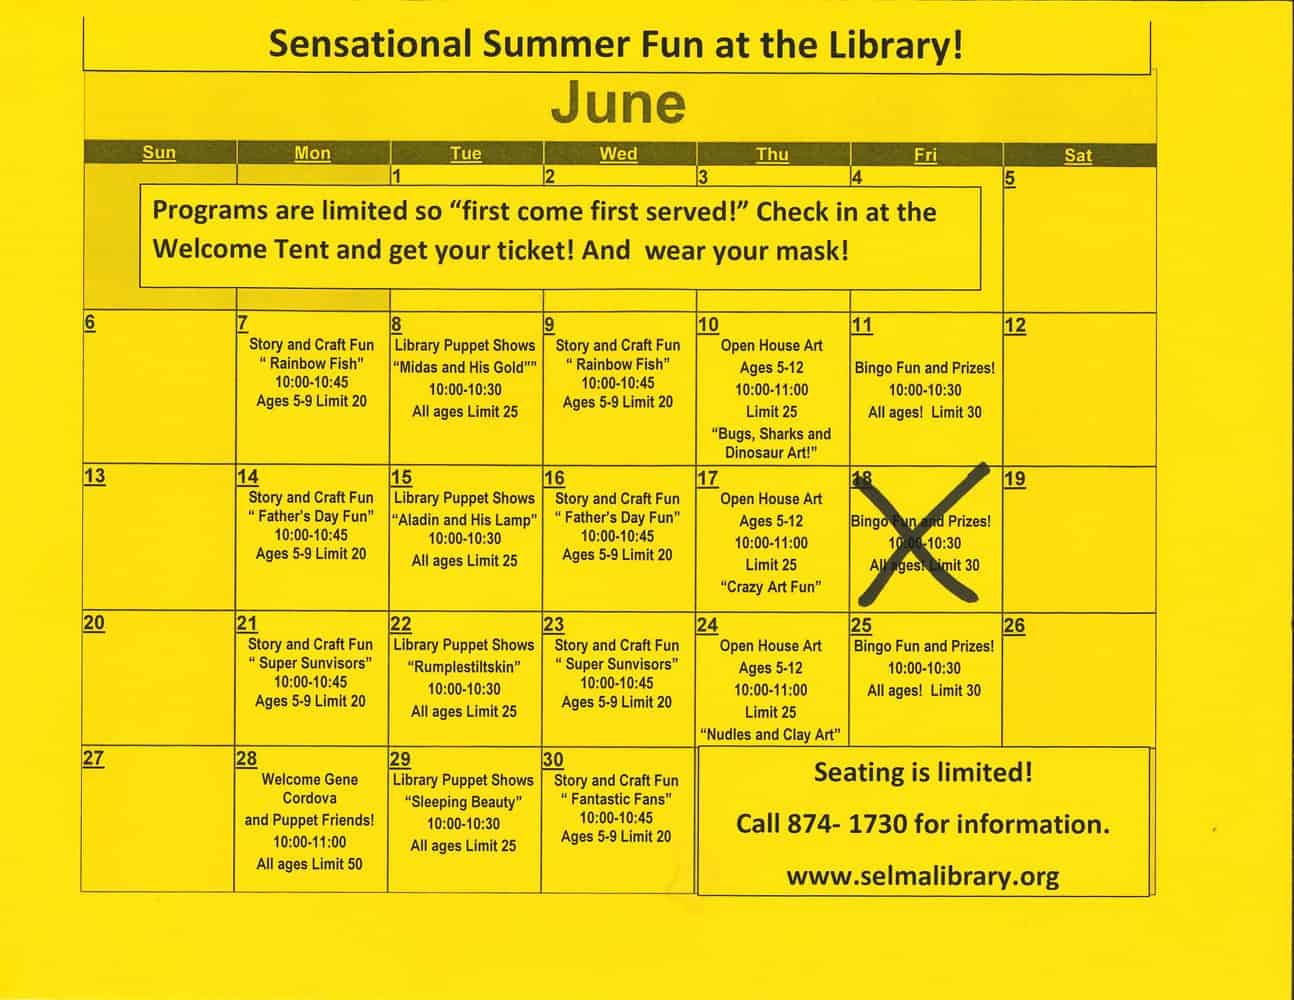 Sensational_Summer_Fun_at_the_Library_June.jpg